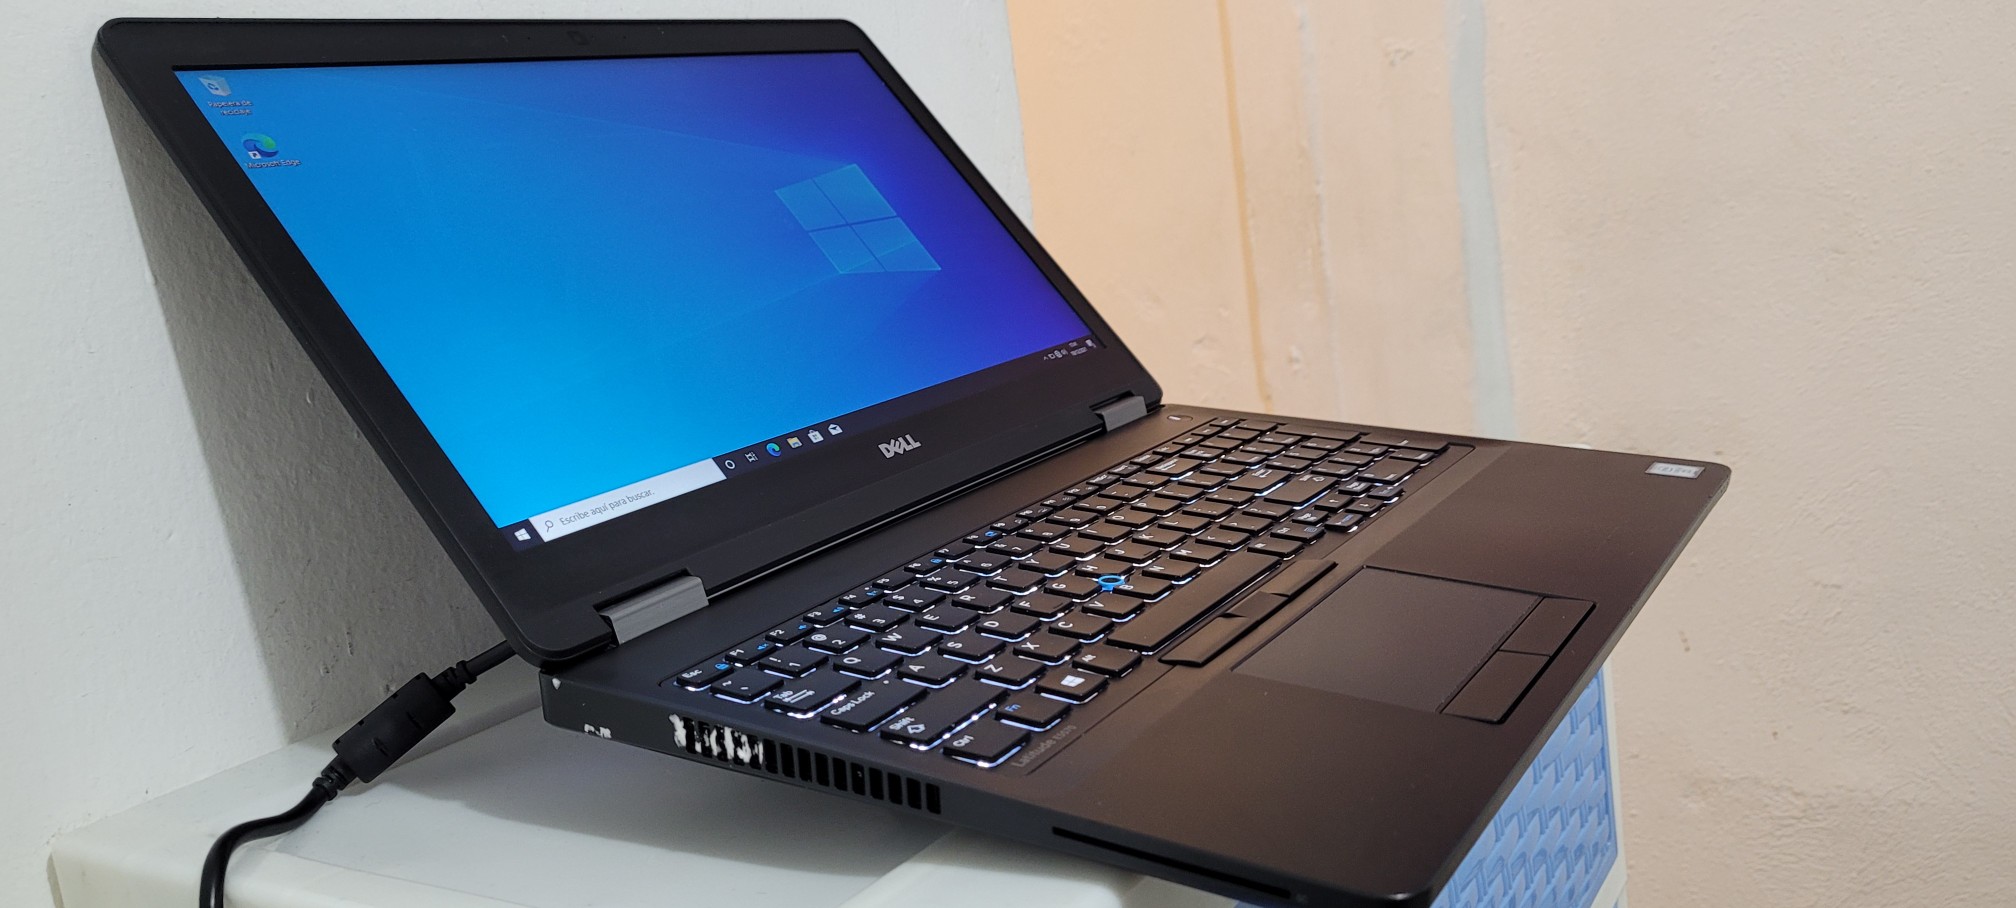 computadoras y laptops - Dell 5550 17 Pulg Core i7 Ram 8gb Disco 1tb hdmi 1